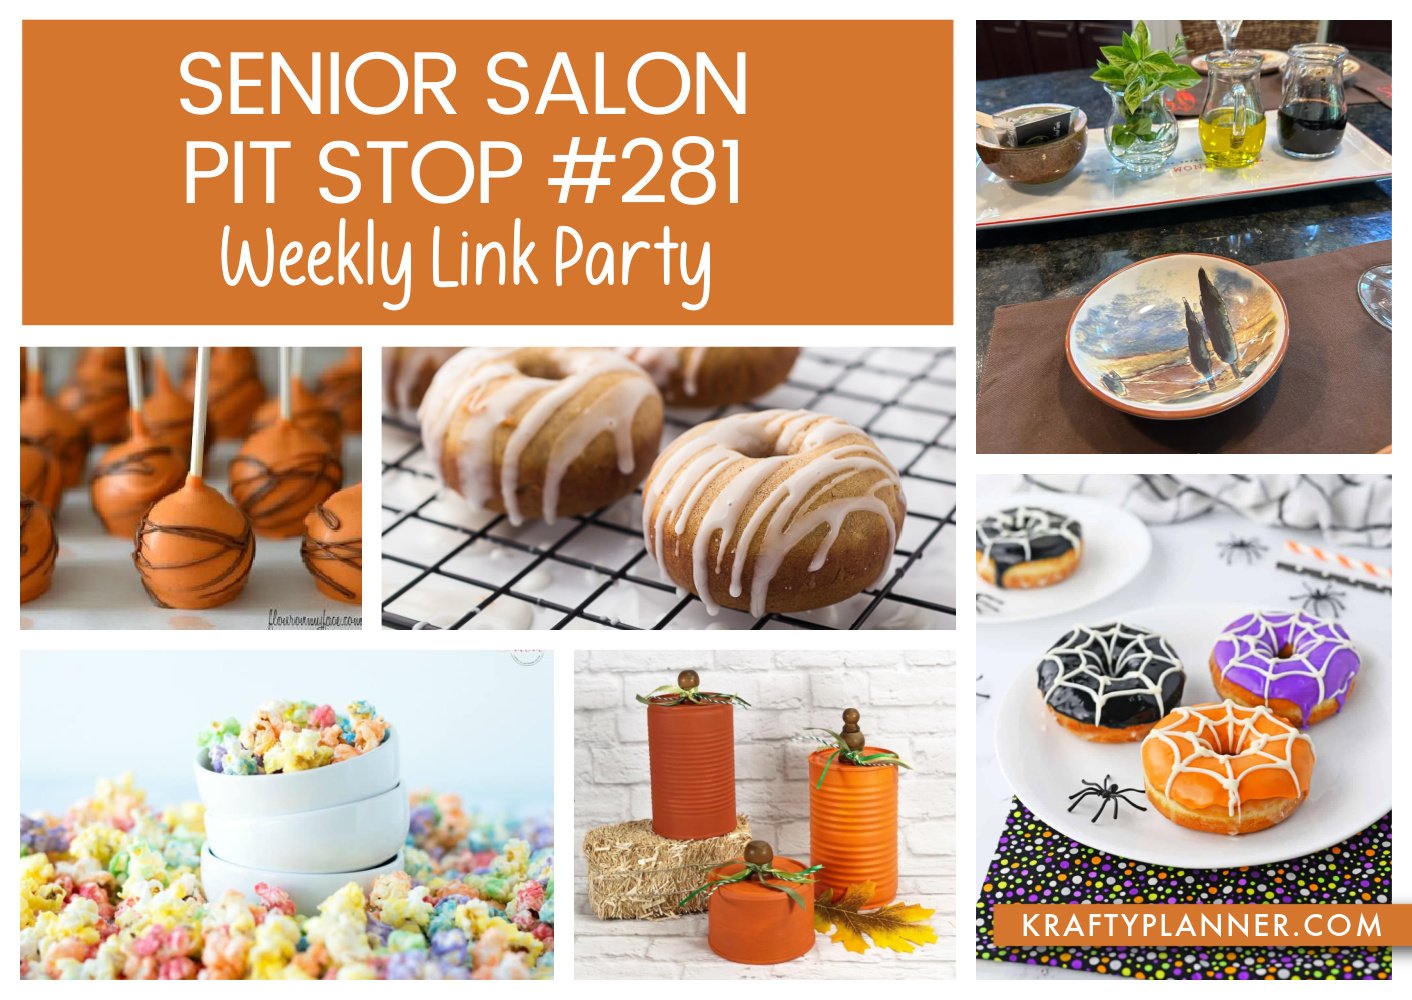 Senior Salon Pit Stop #281